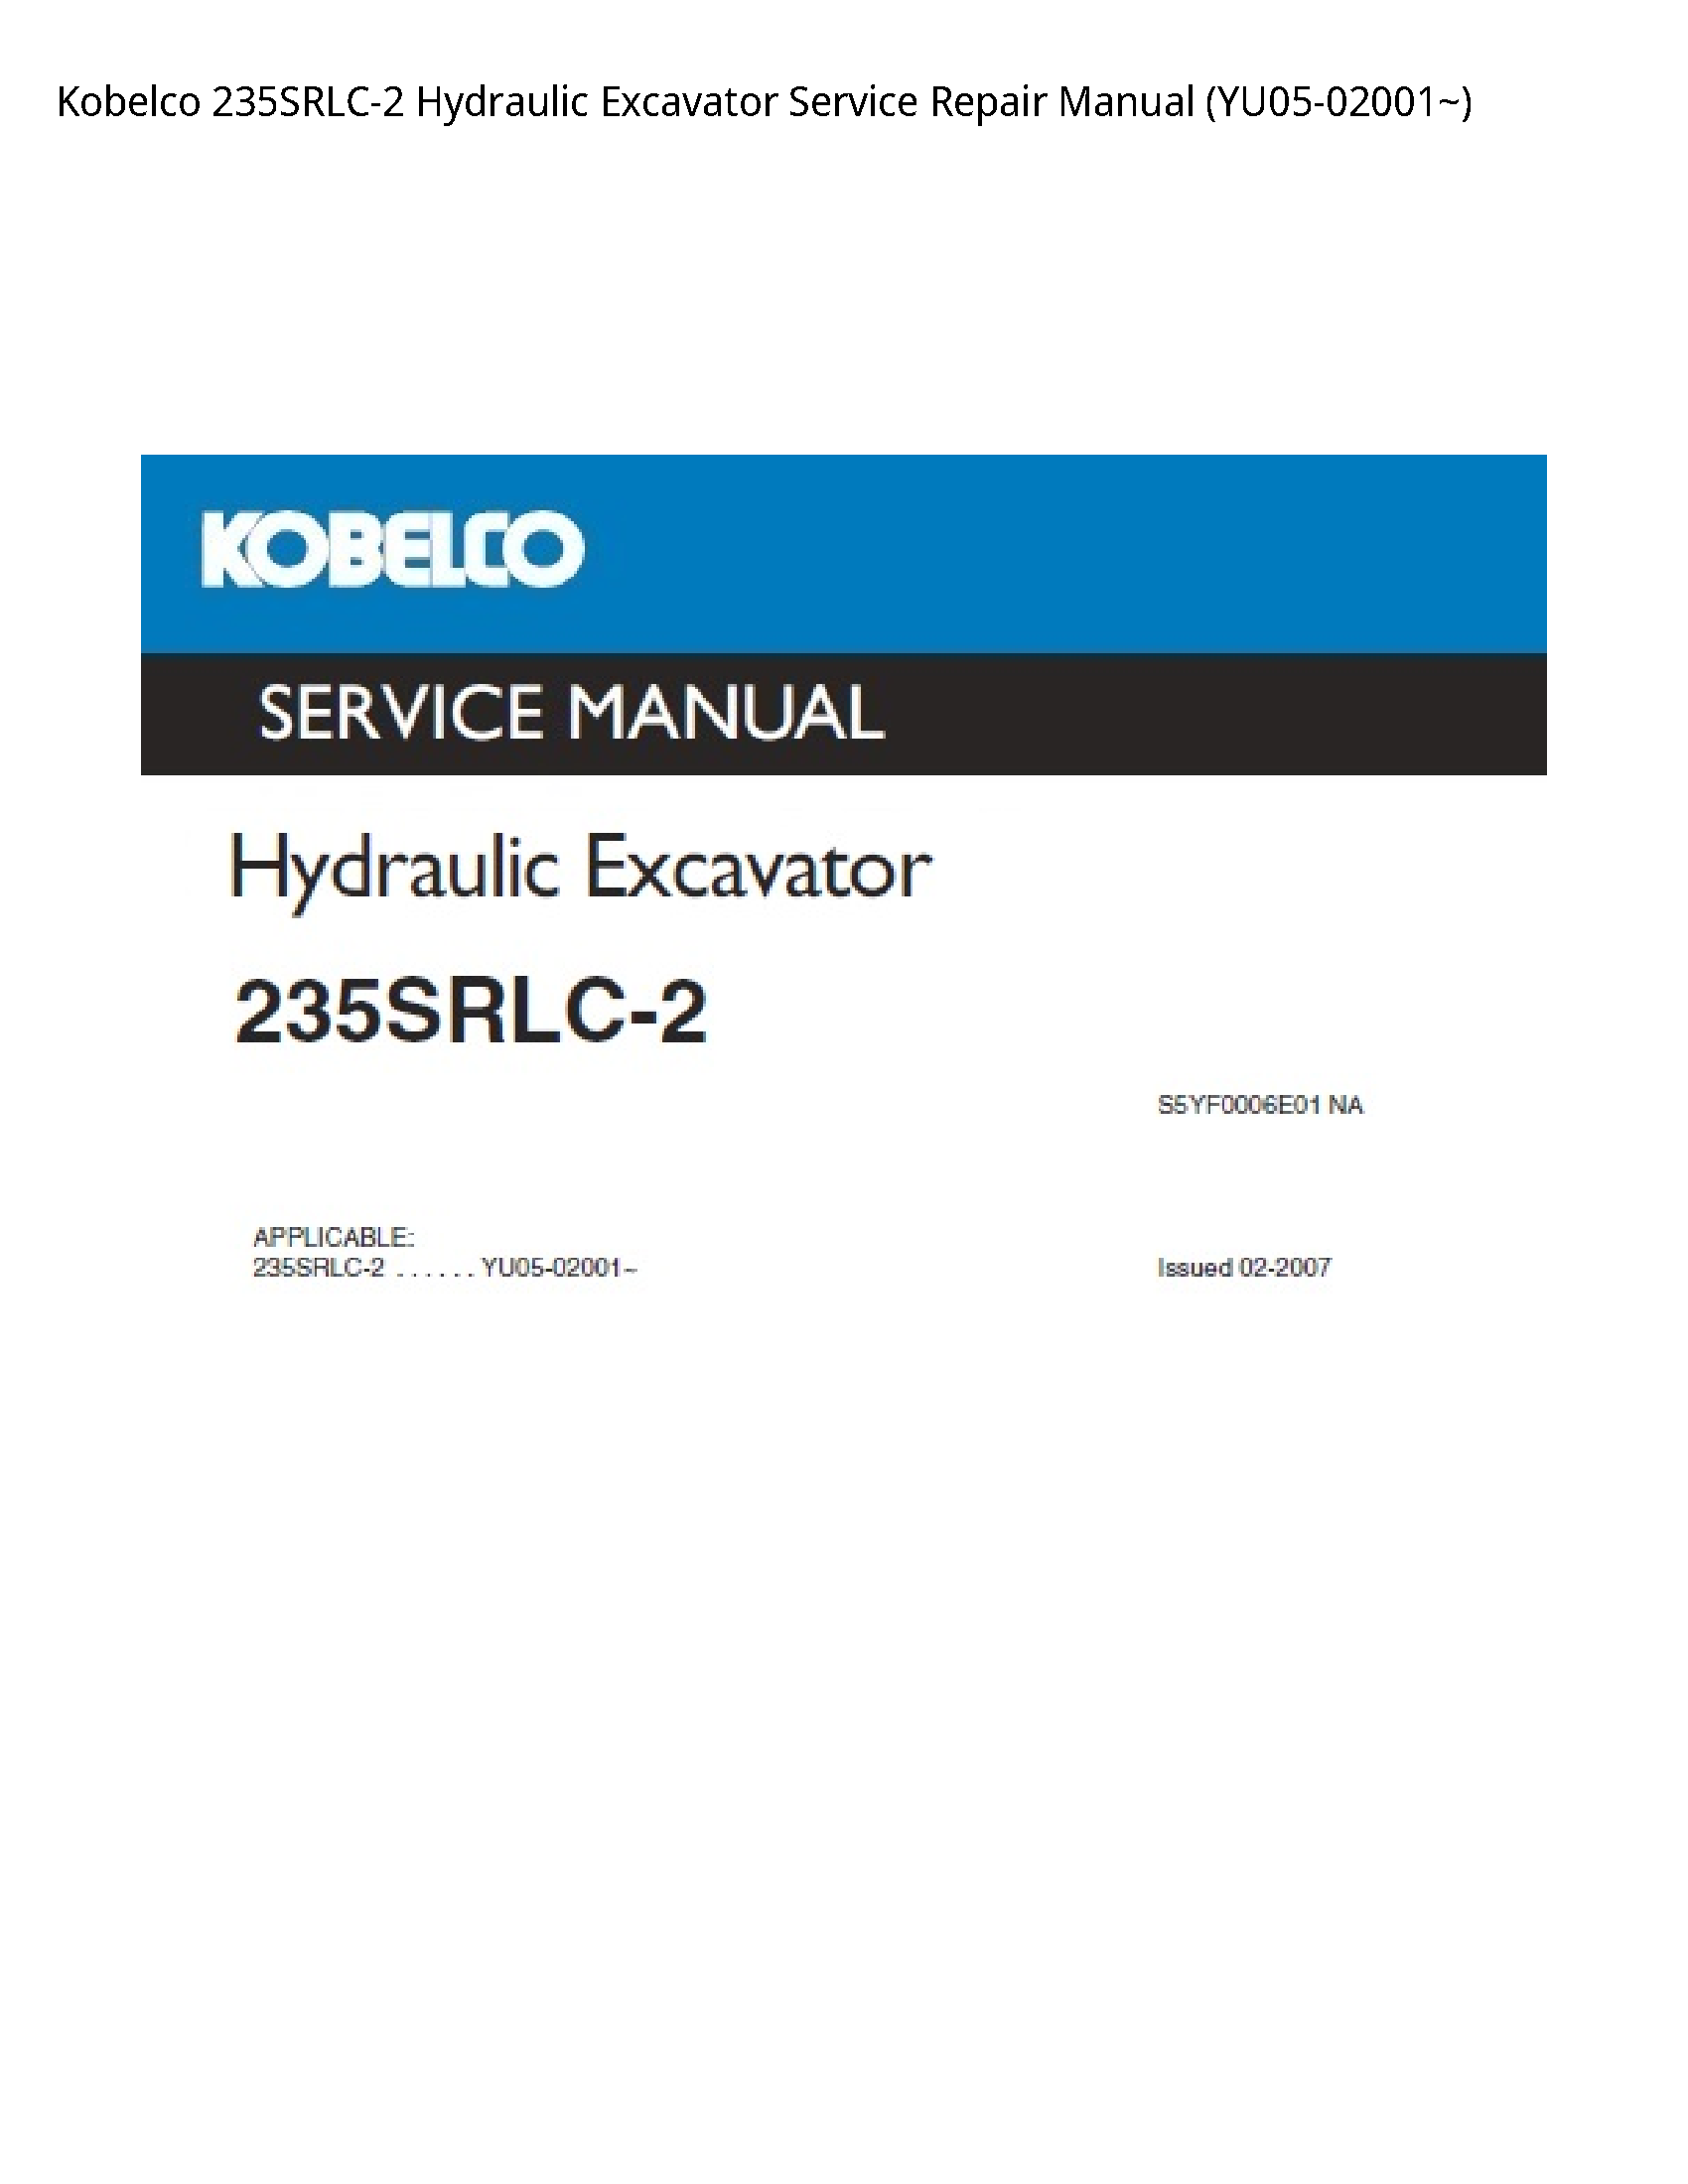 Kobelco 235SRLC-2 Hydraulic Excavator manual